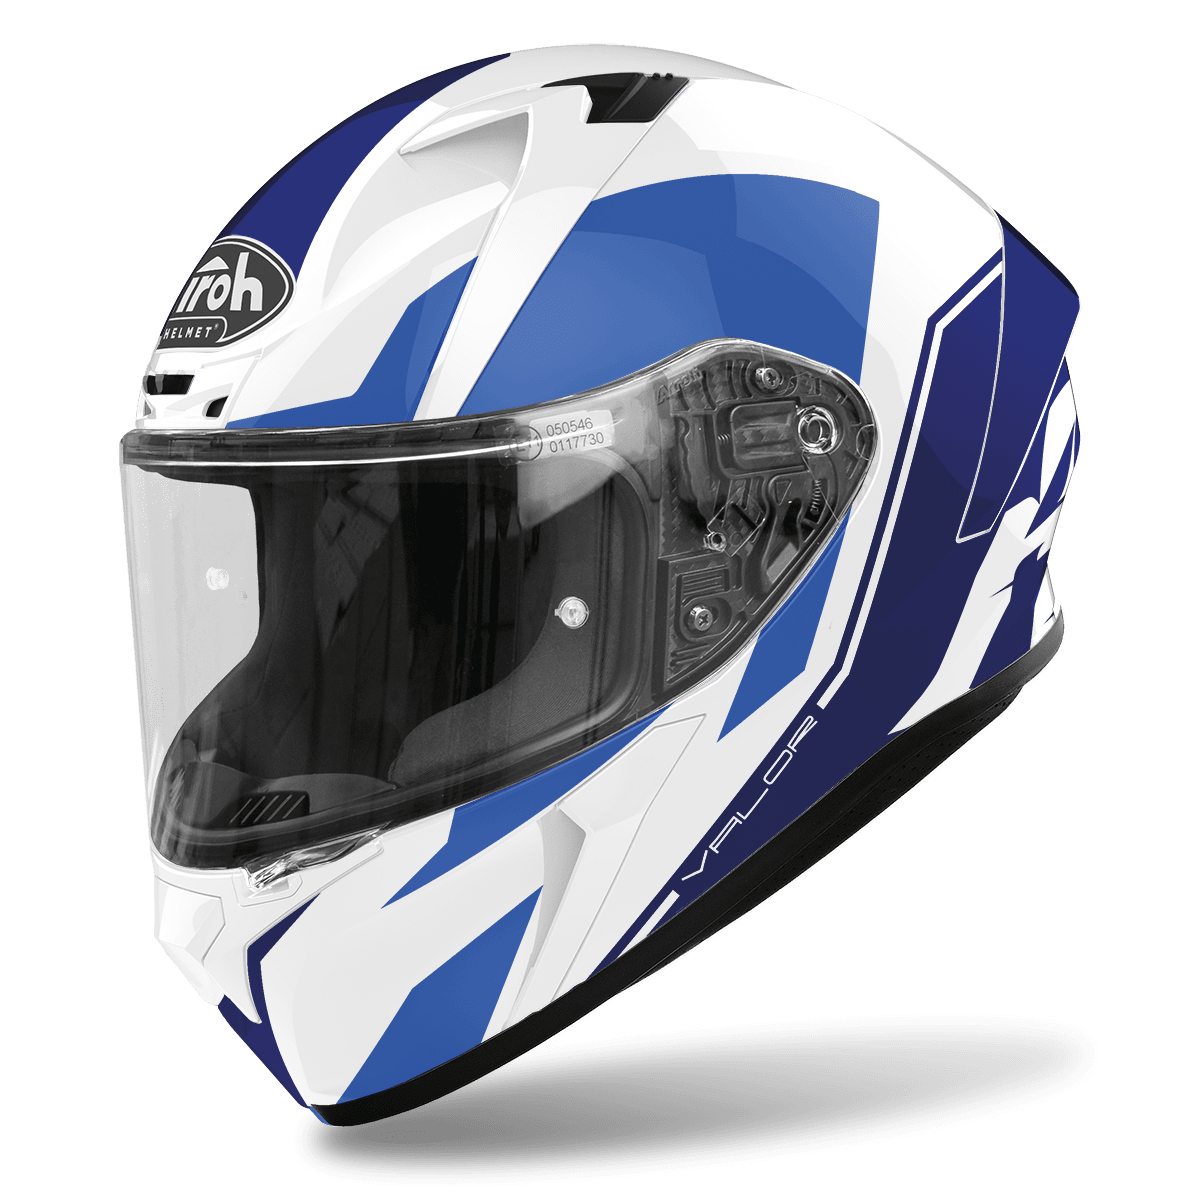 Caschi Moto Uomo, accessori moto, caschi integrali e caschi jet 